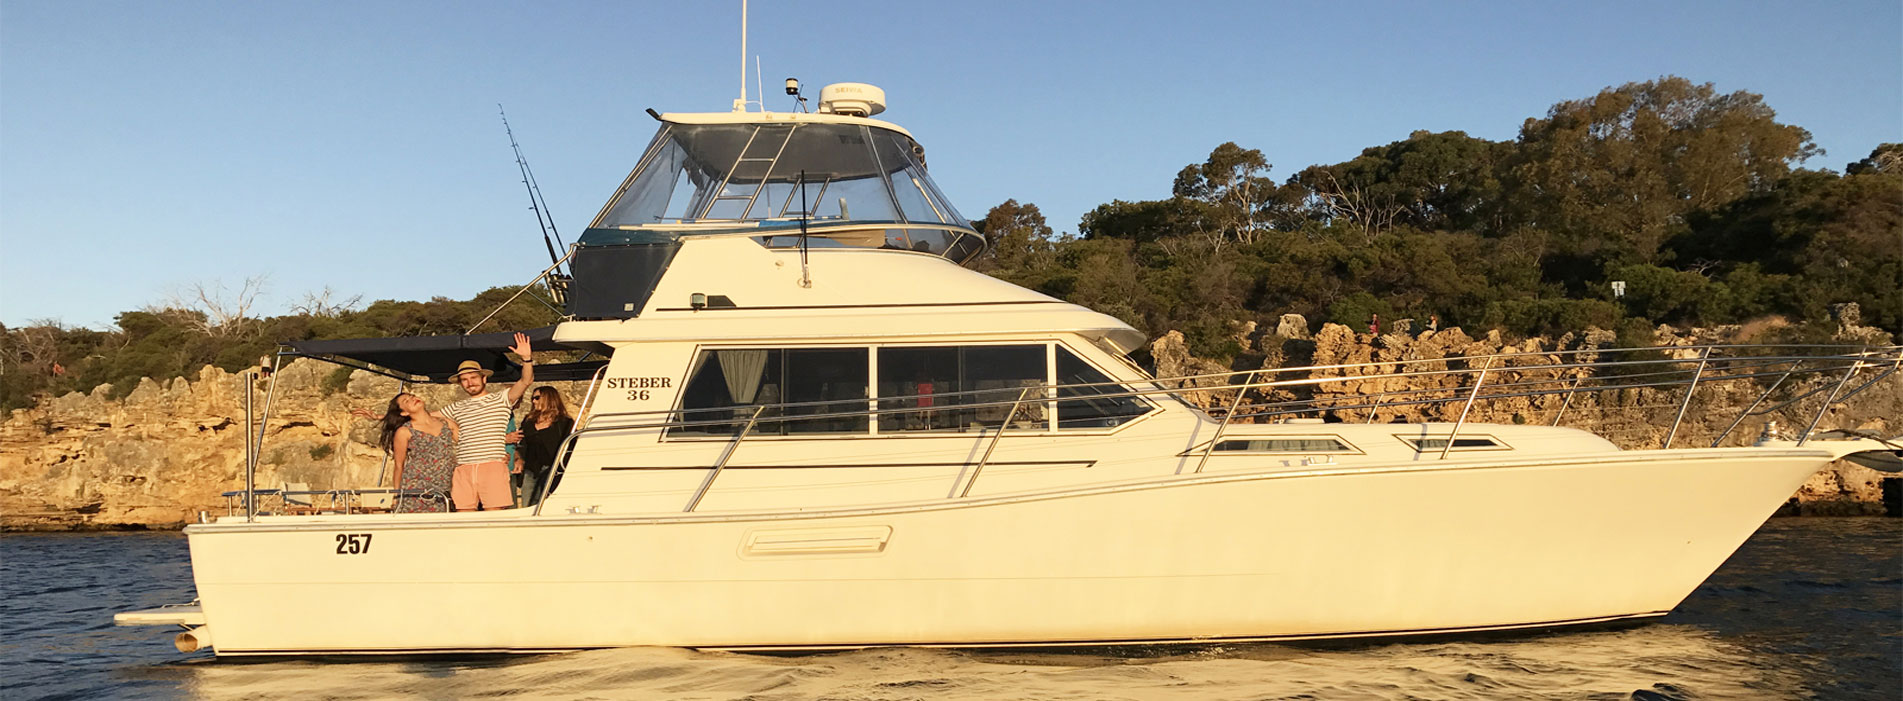 MOONSHINE-II-boat-charter-hire-Perth-WA-Swan-River-Rottnest-Island